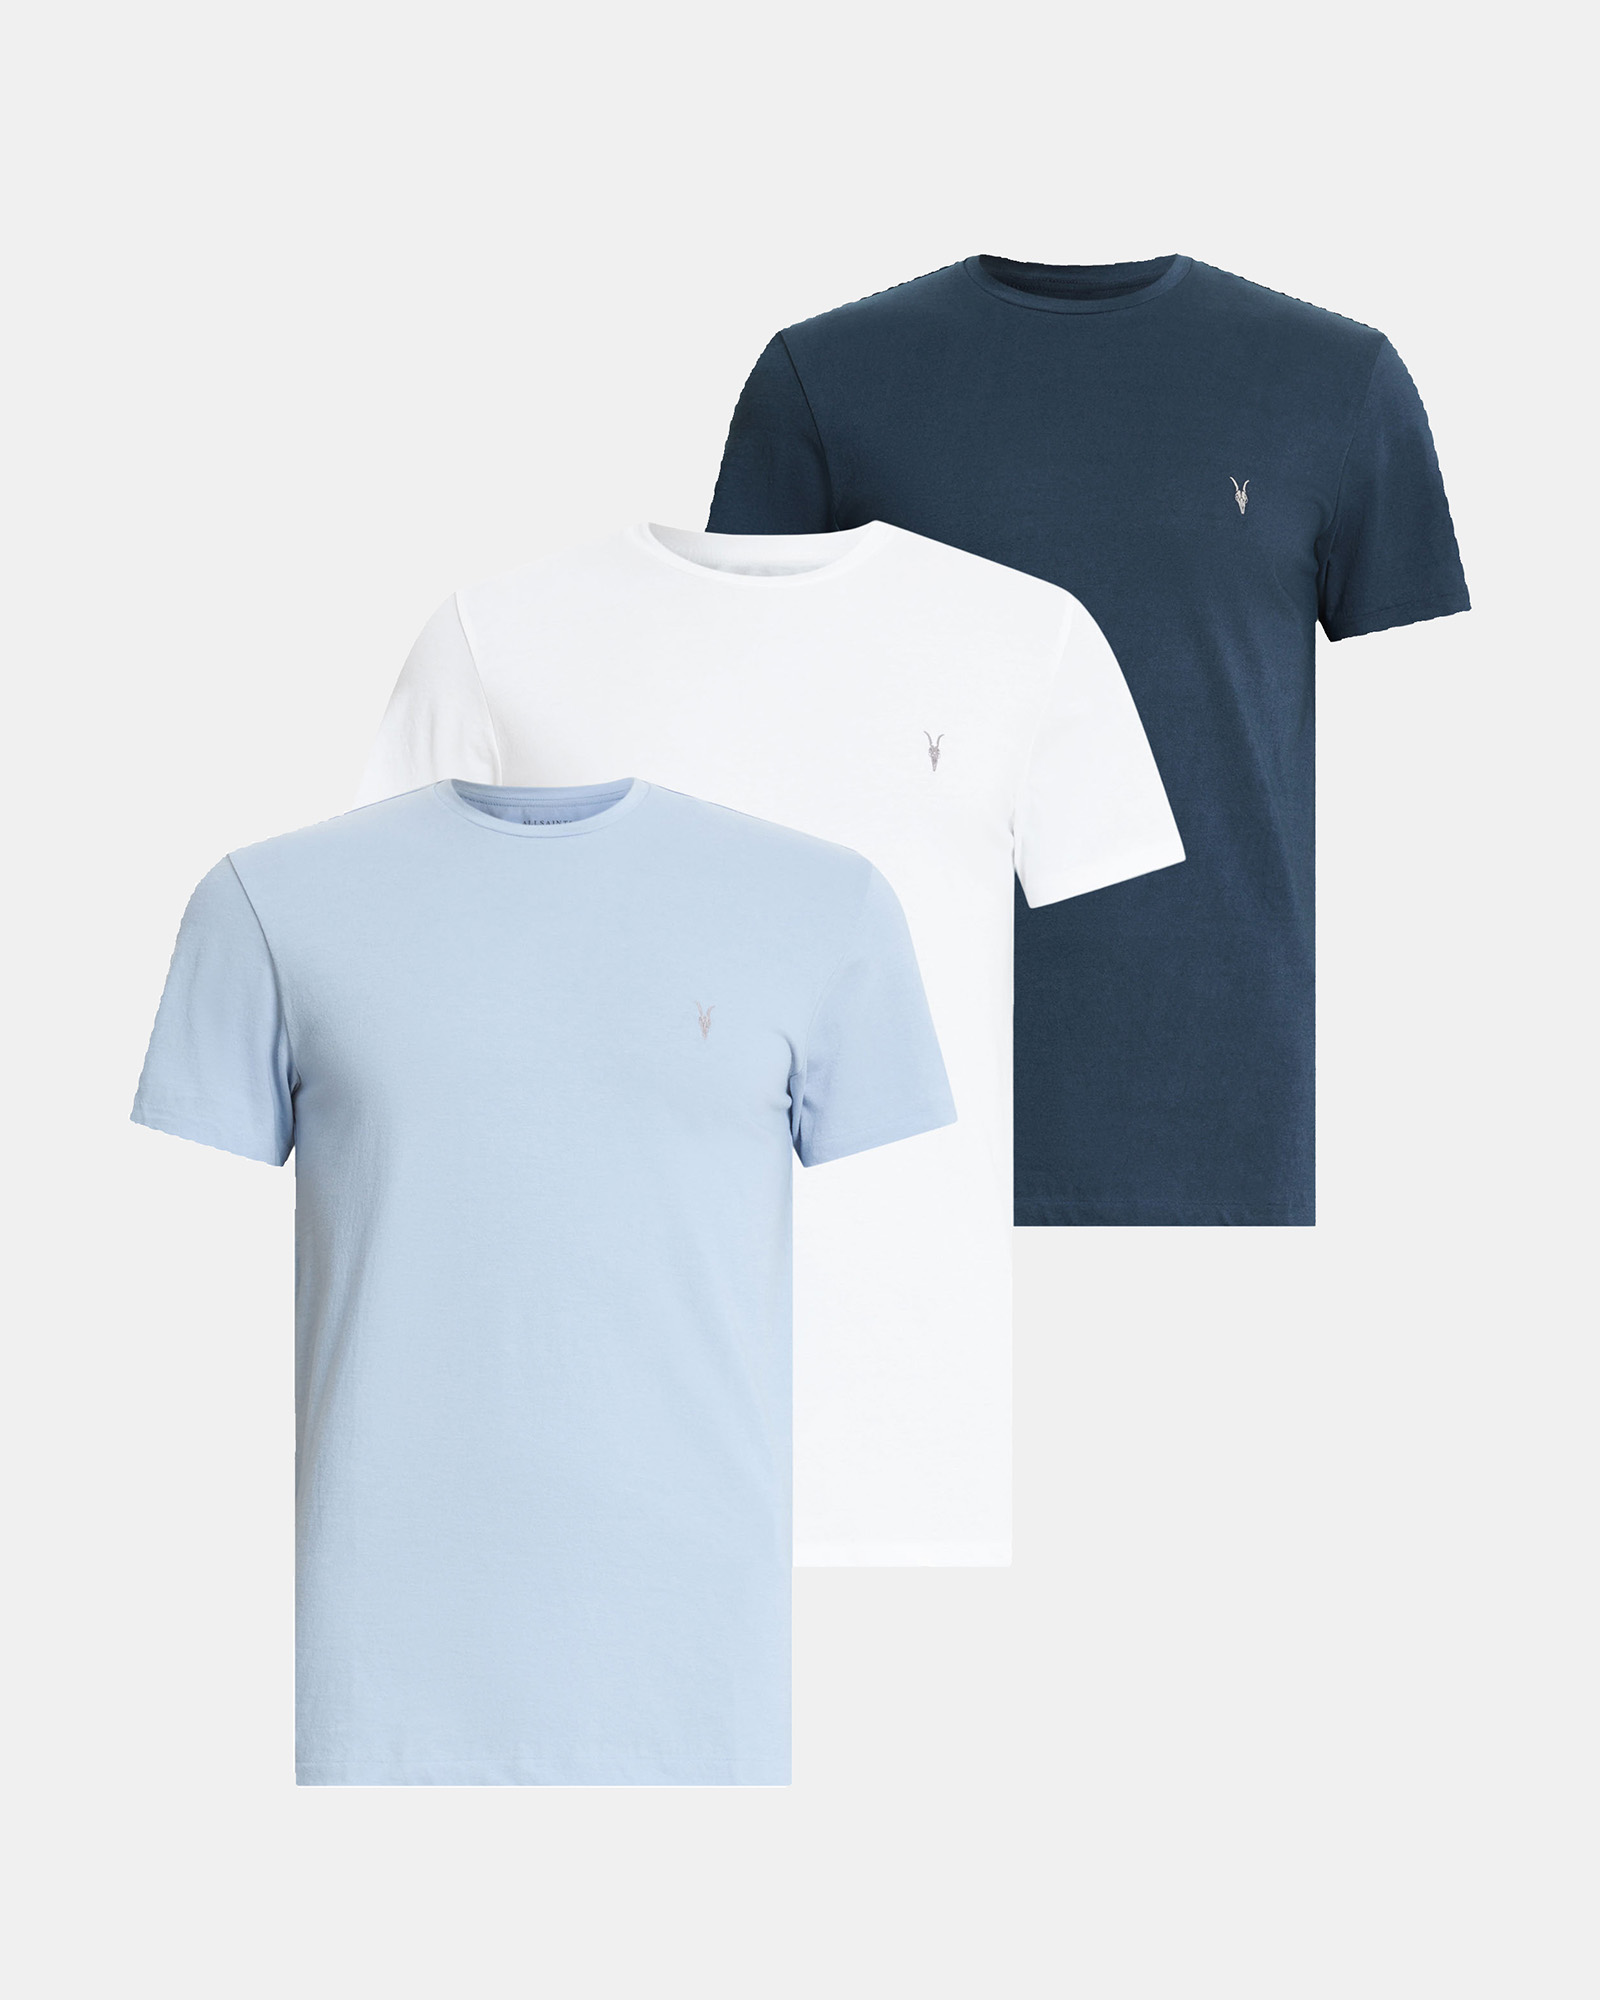 AllSaints Tonic Crew Ramskull T-Shirts 3 Pack,, Size: